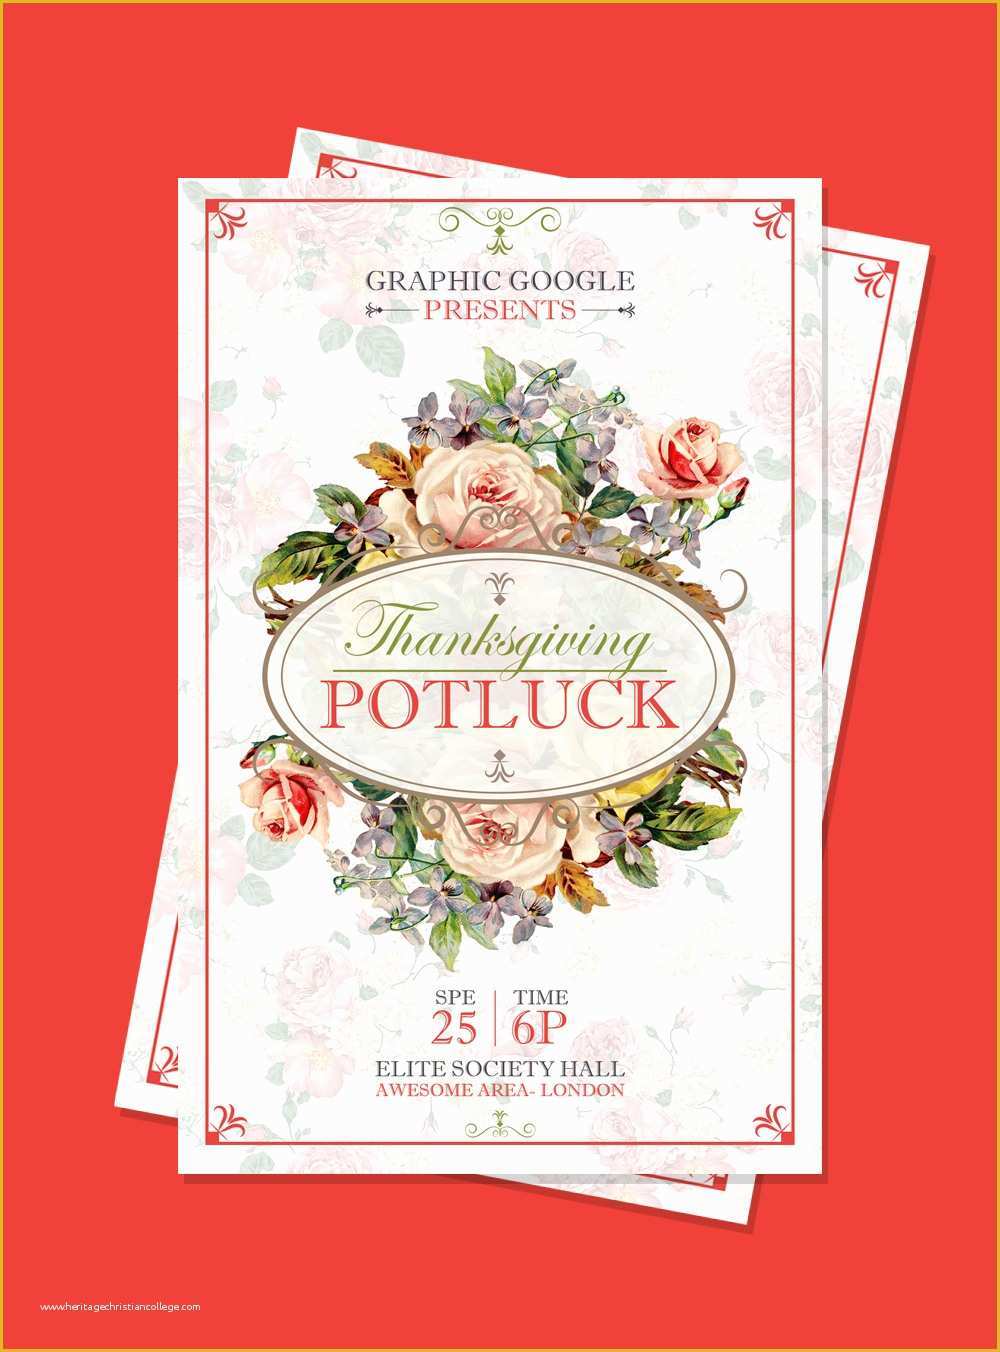 Free Thanksgiving Potluck Flyer Templates Of Free Potluck Thanksgiving Flyer Template Design Psdgraphic